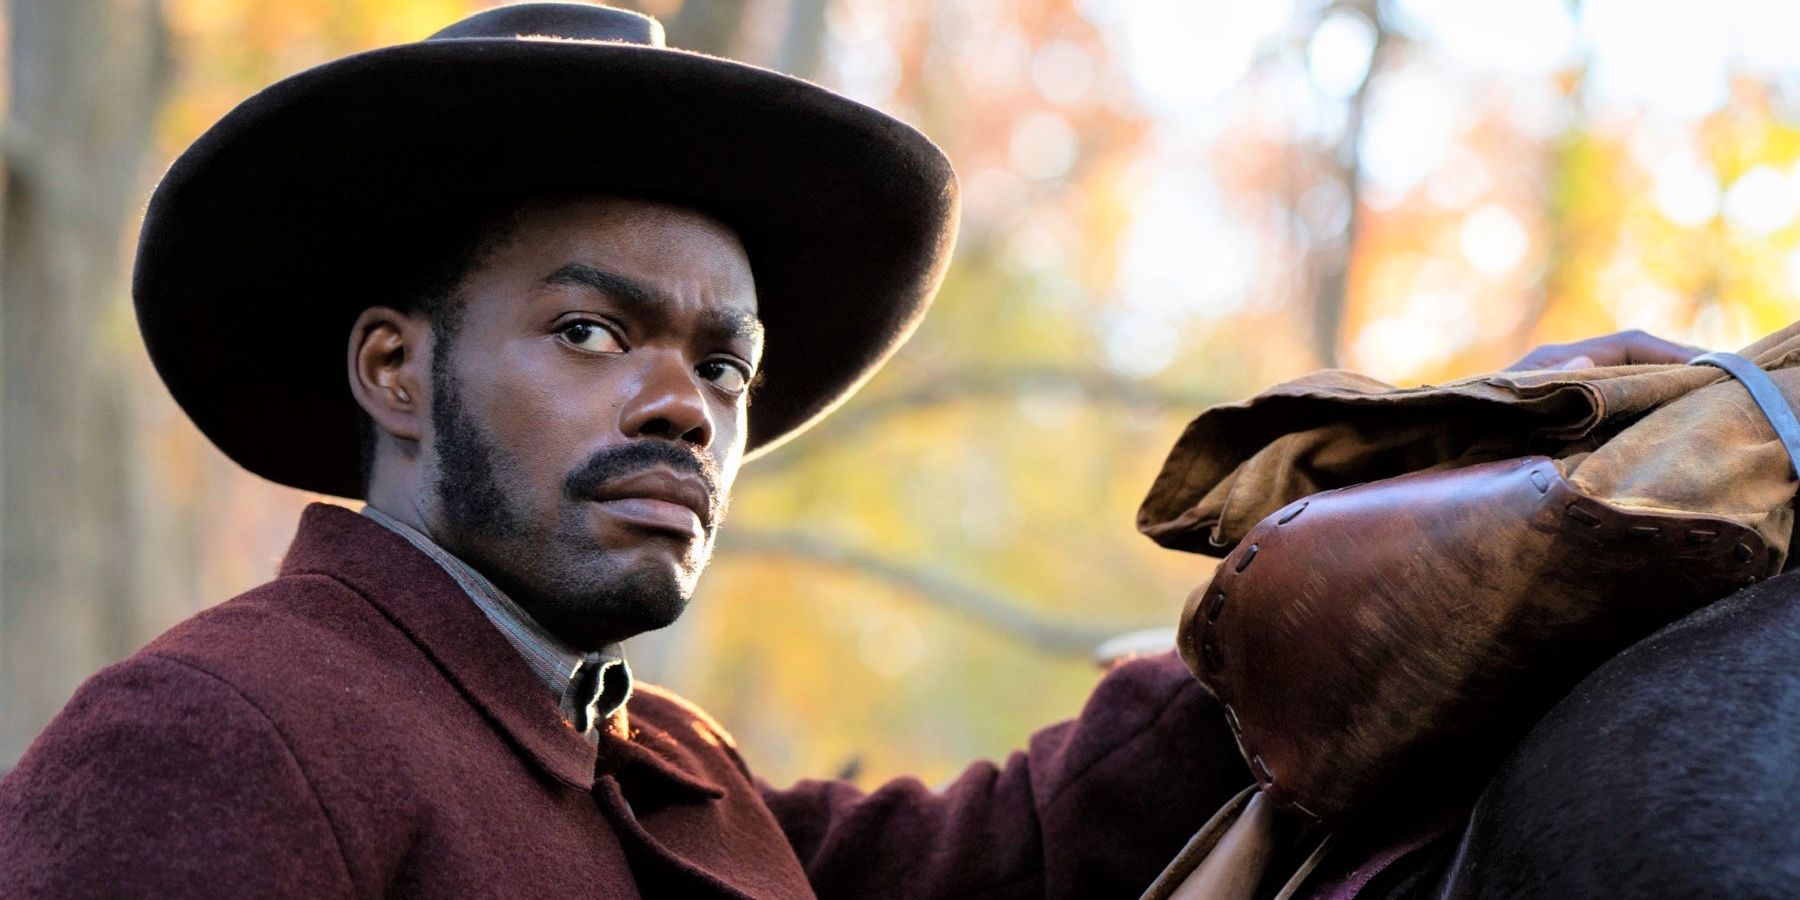 William Jackson Harper plays Royal in The Underground Railroad